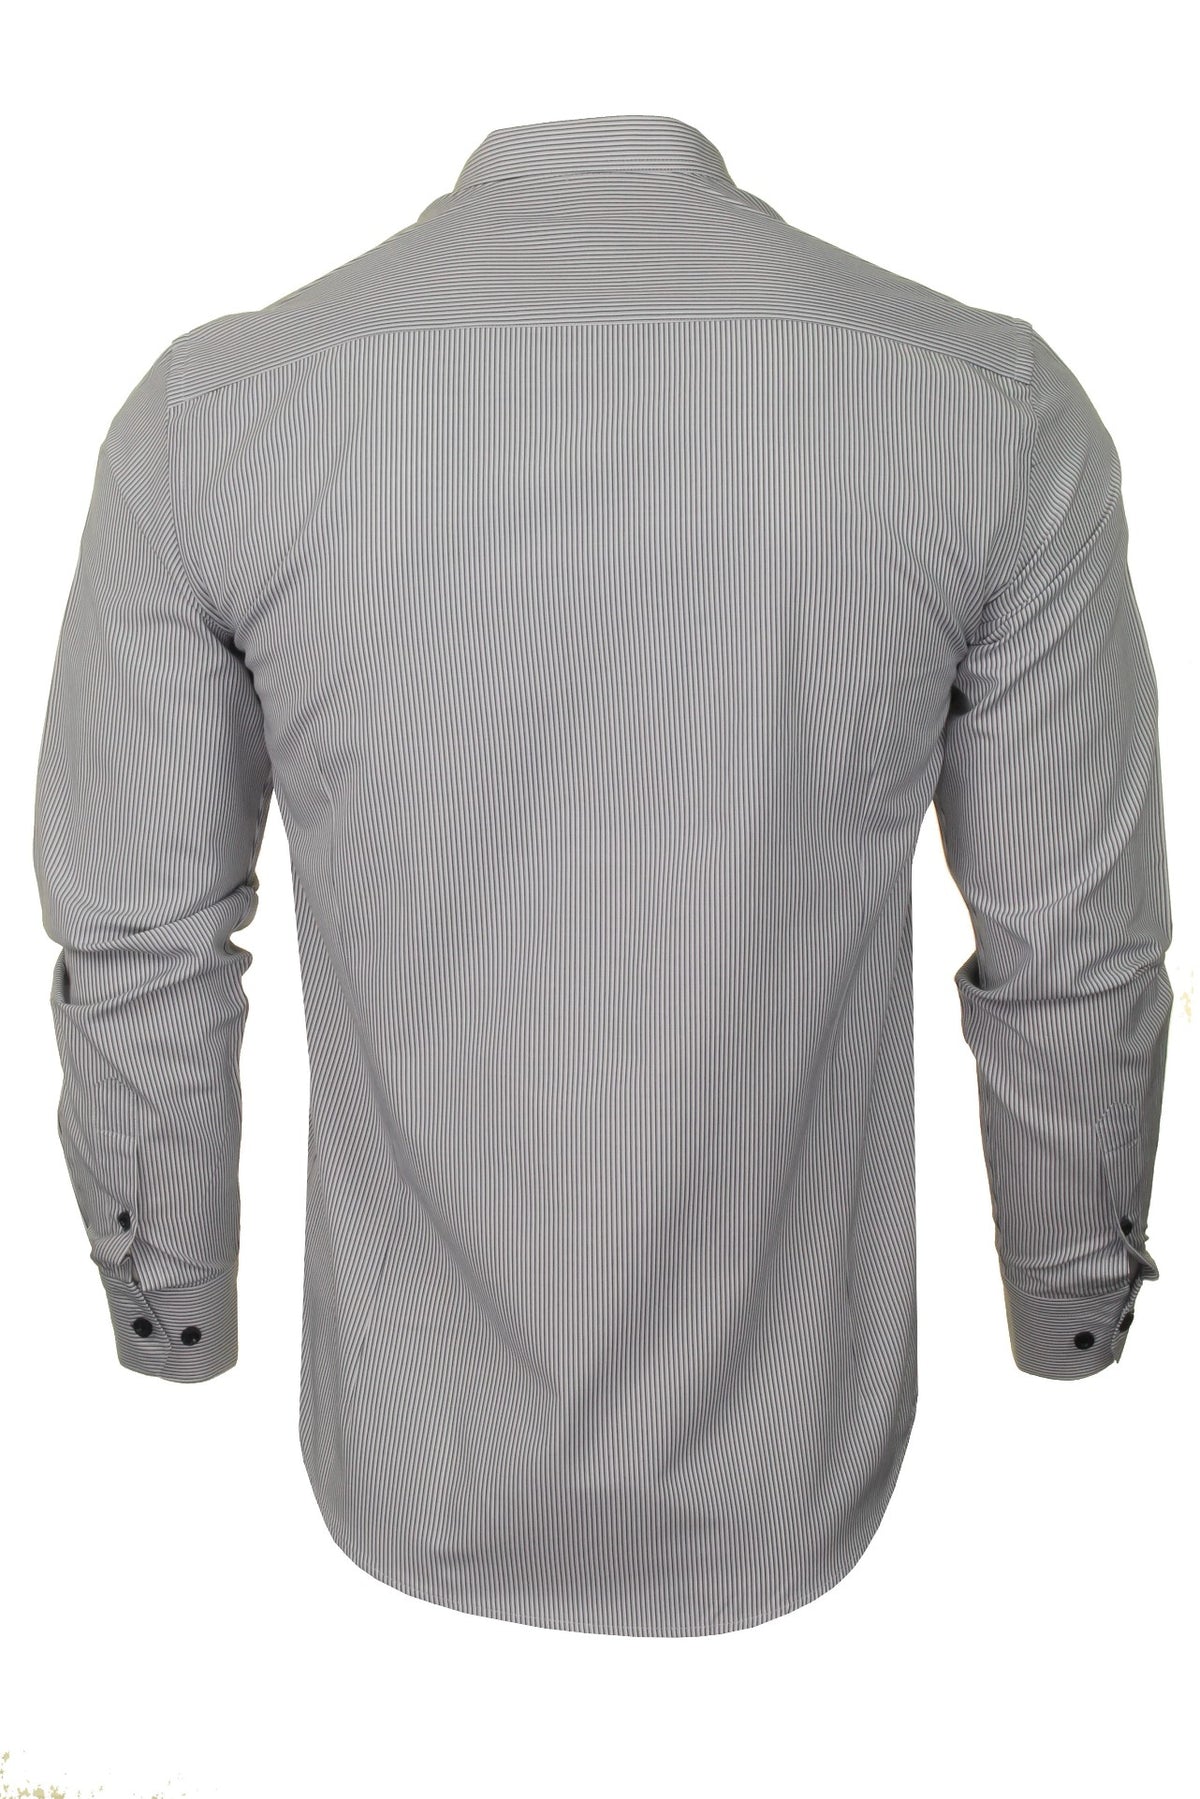 Xact Mens Stripe Grandad Shirt - Long Sleeved, 03, Xsh1078, White Navy Stripe